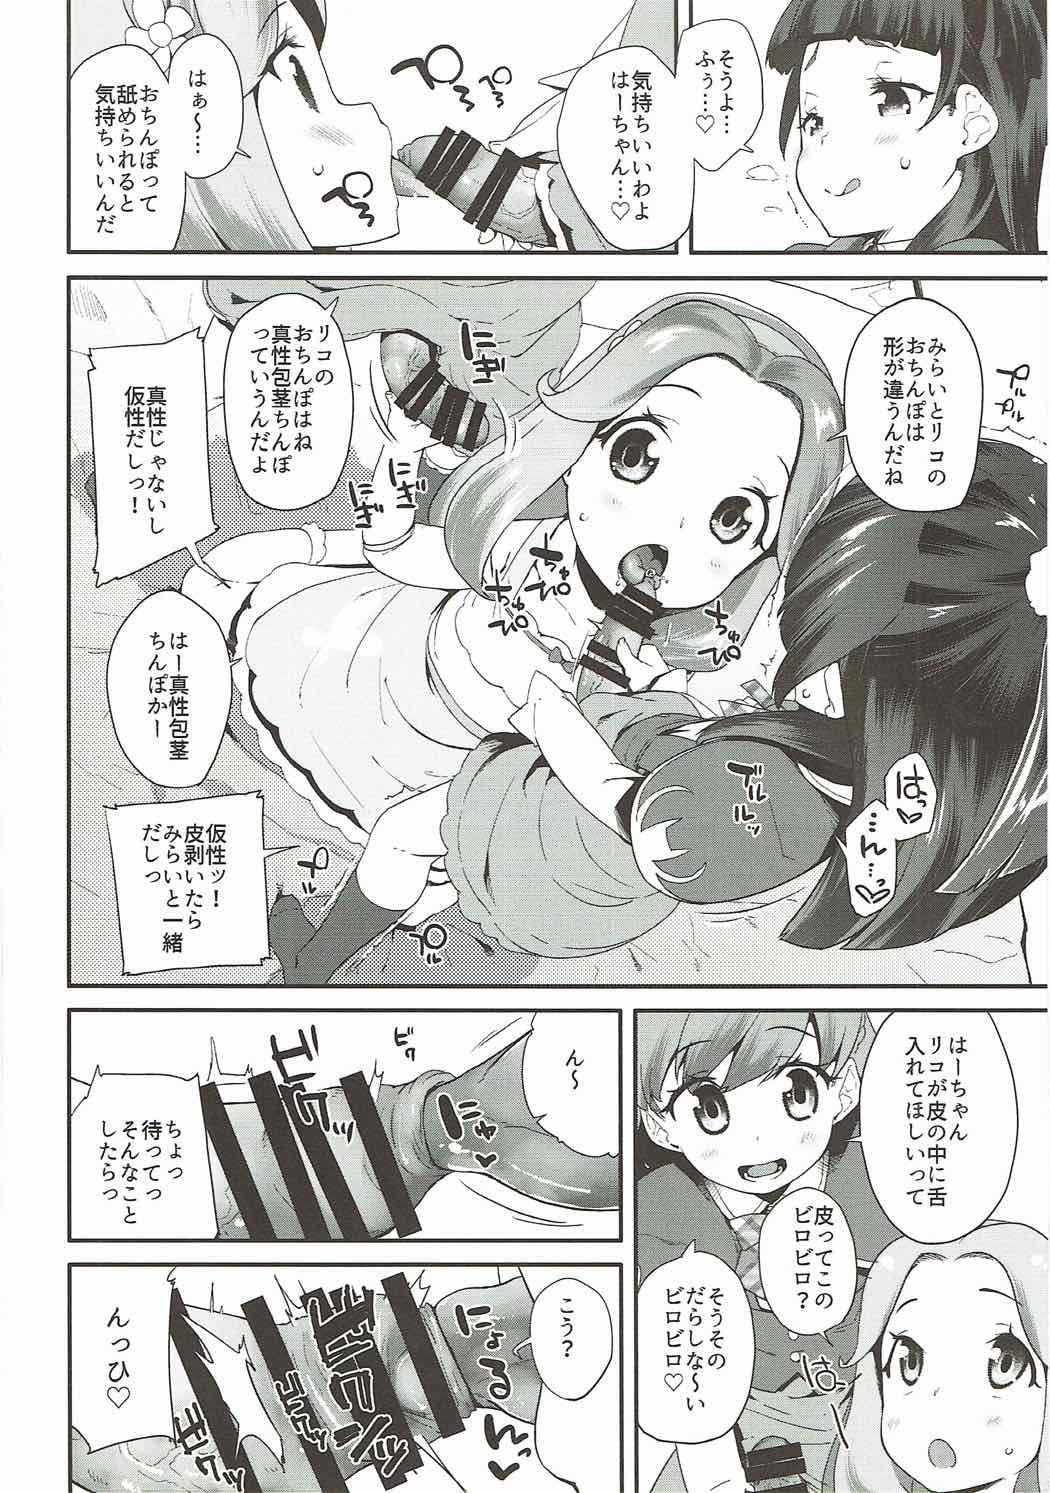 Gostoso Cure Up Ra Pa Pa! Ha-chan no Noumiso Kowarechae! - Maho girls precure Star - Page 5